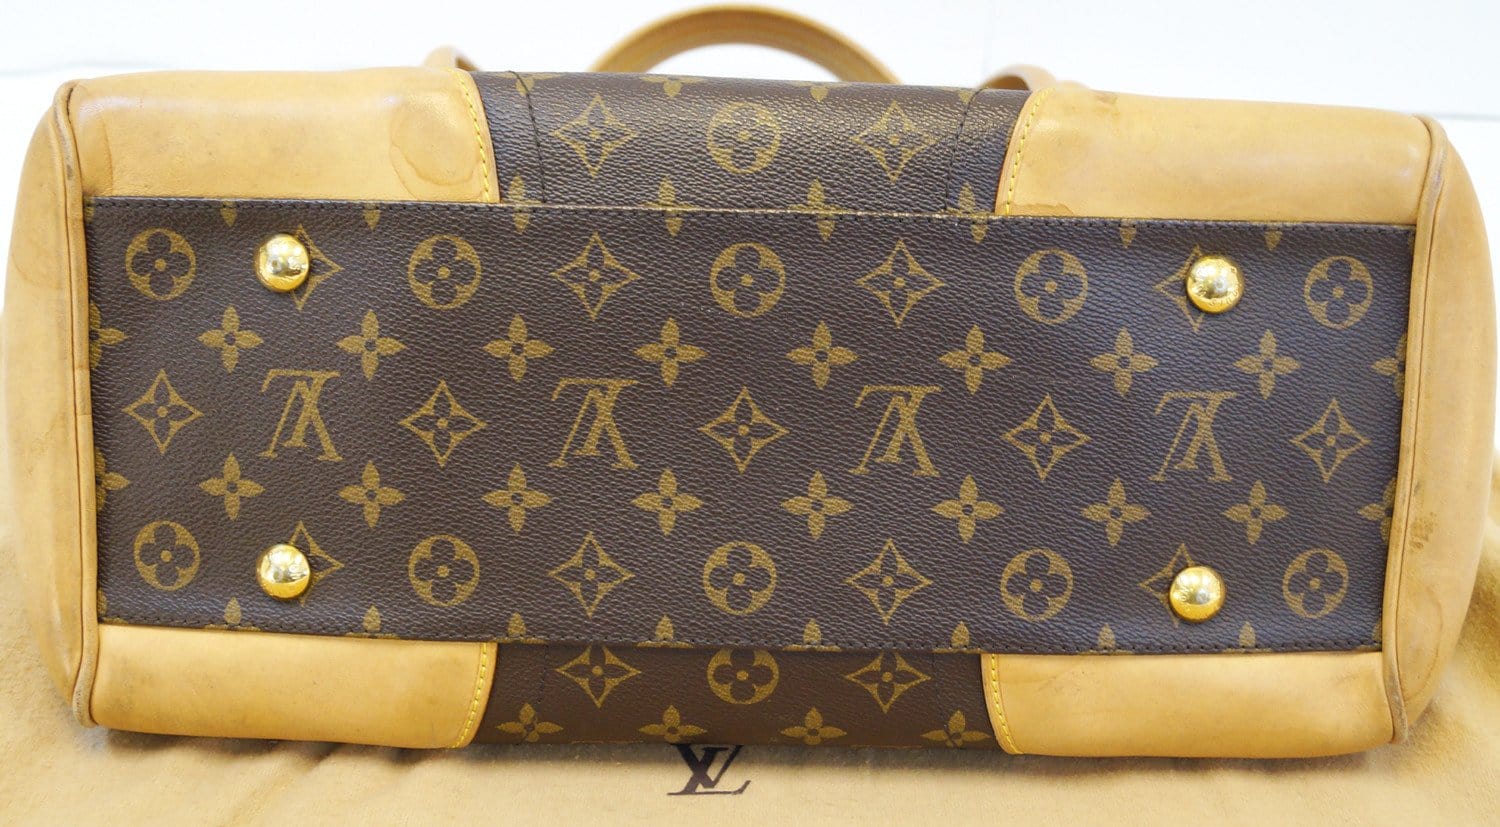 Louis Vuitton Wilshire GM – Brand Bag Girl